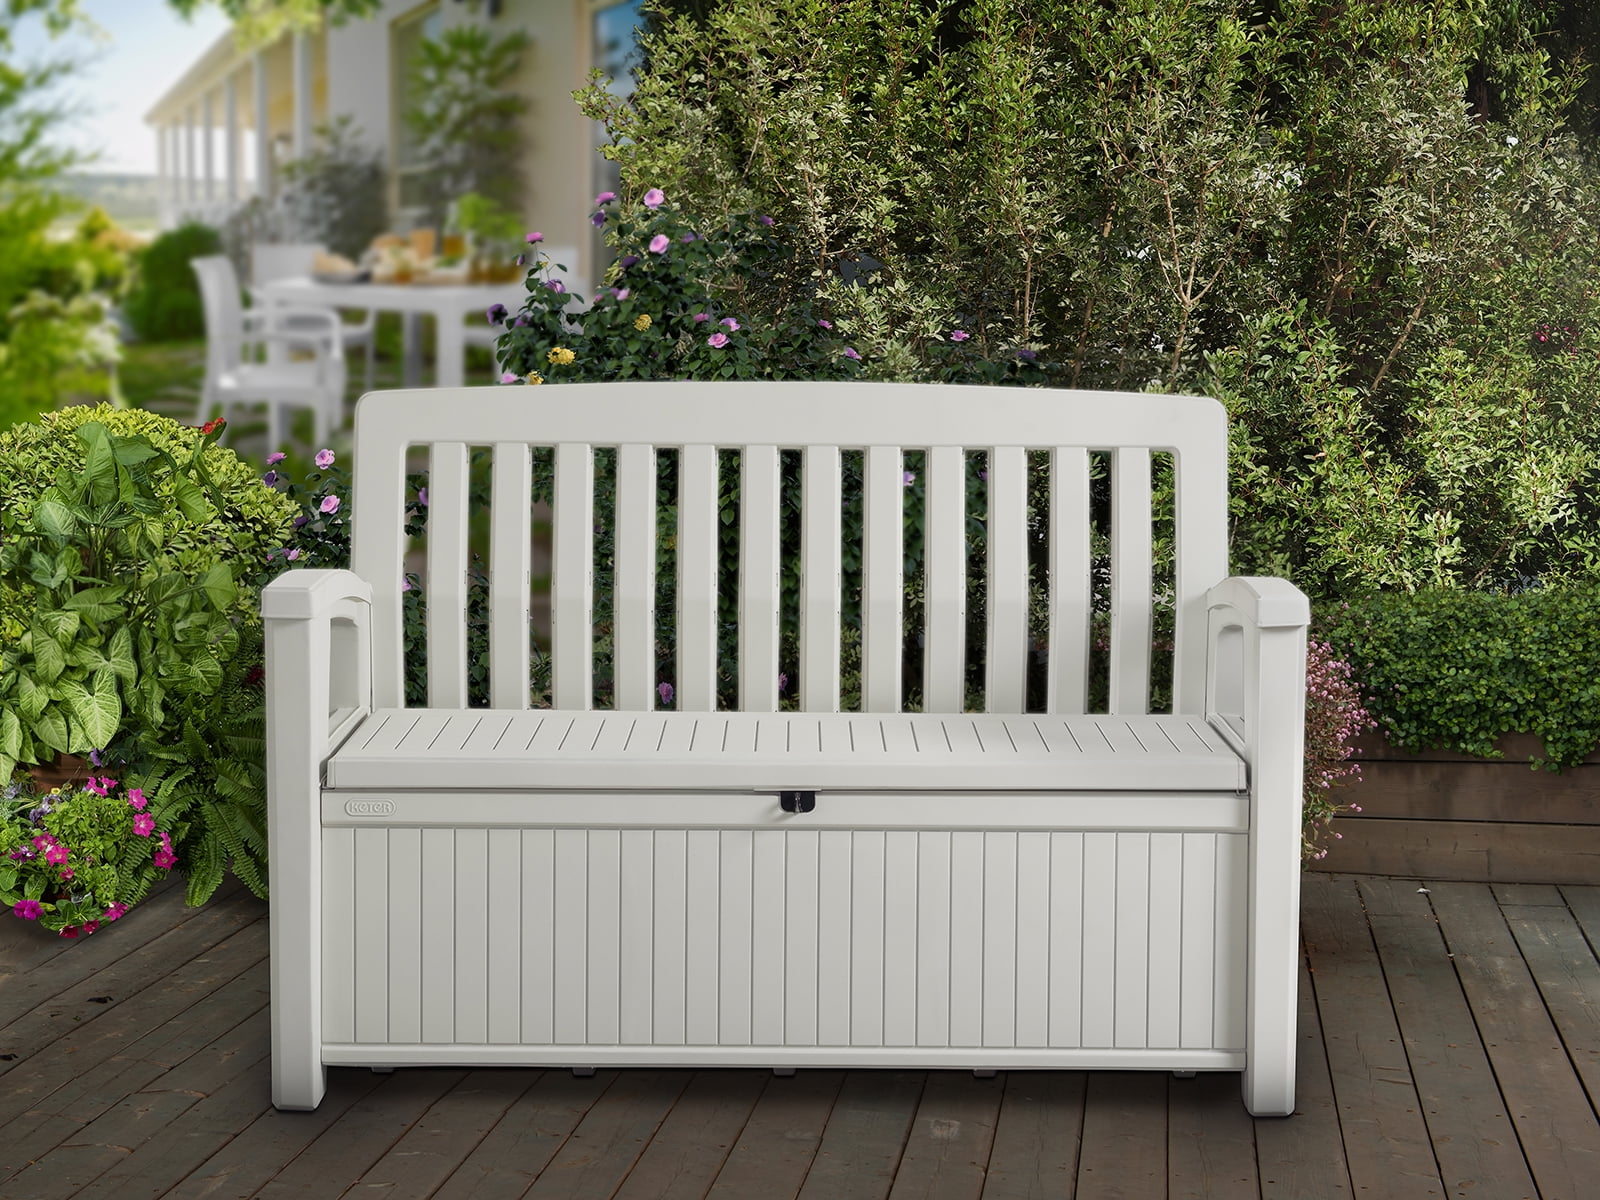 Keter Garden Seat Storage On Up, Bench Seat With Storage Outdoor